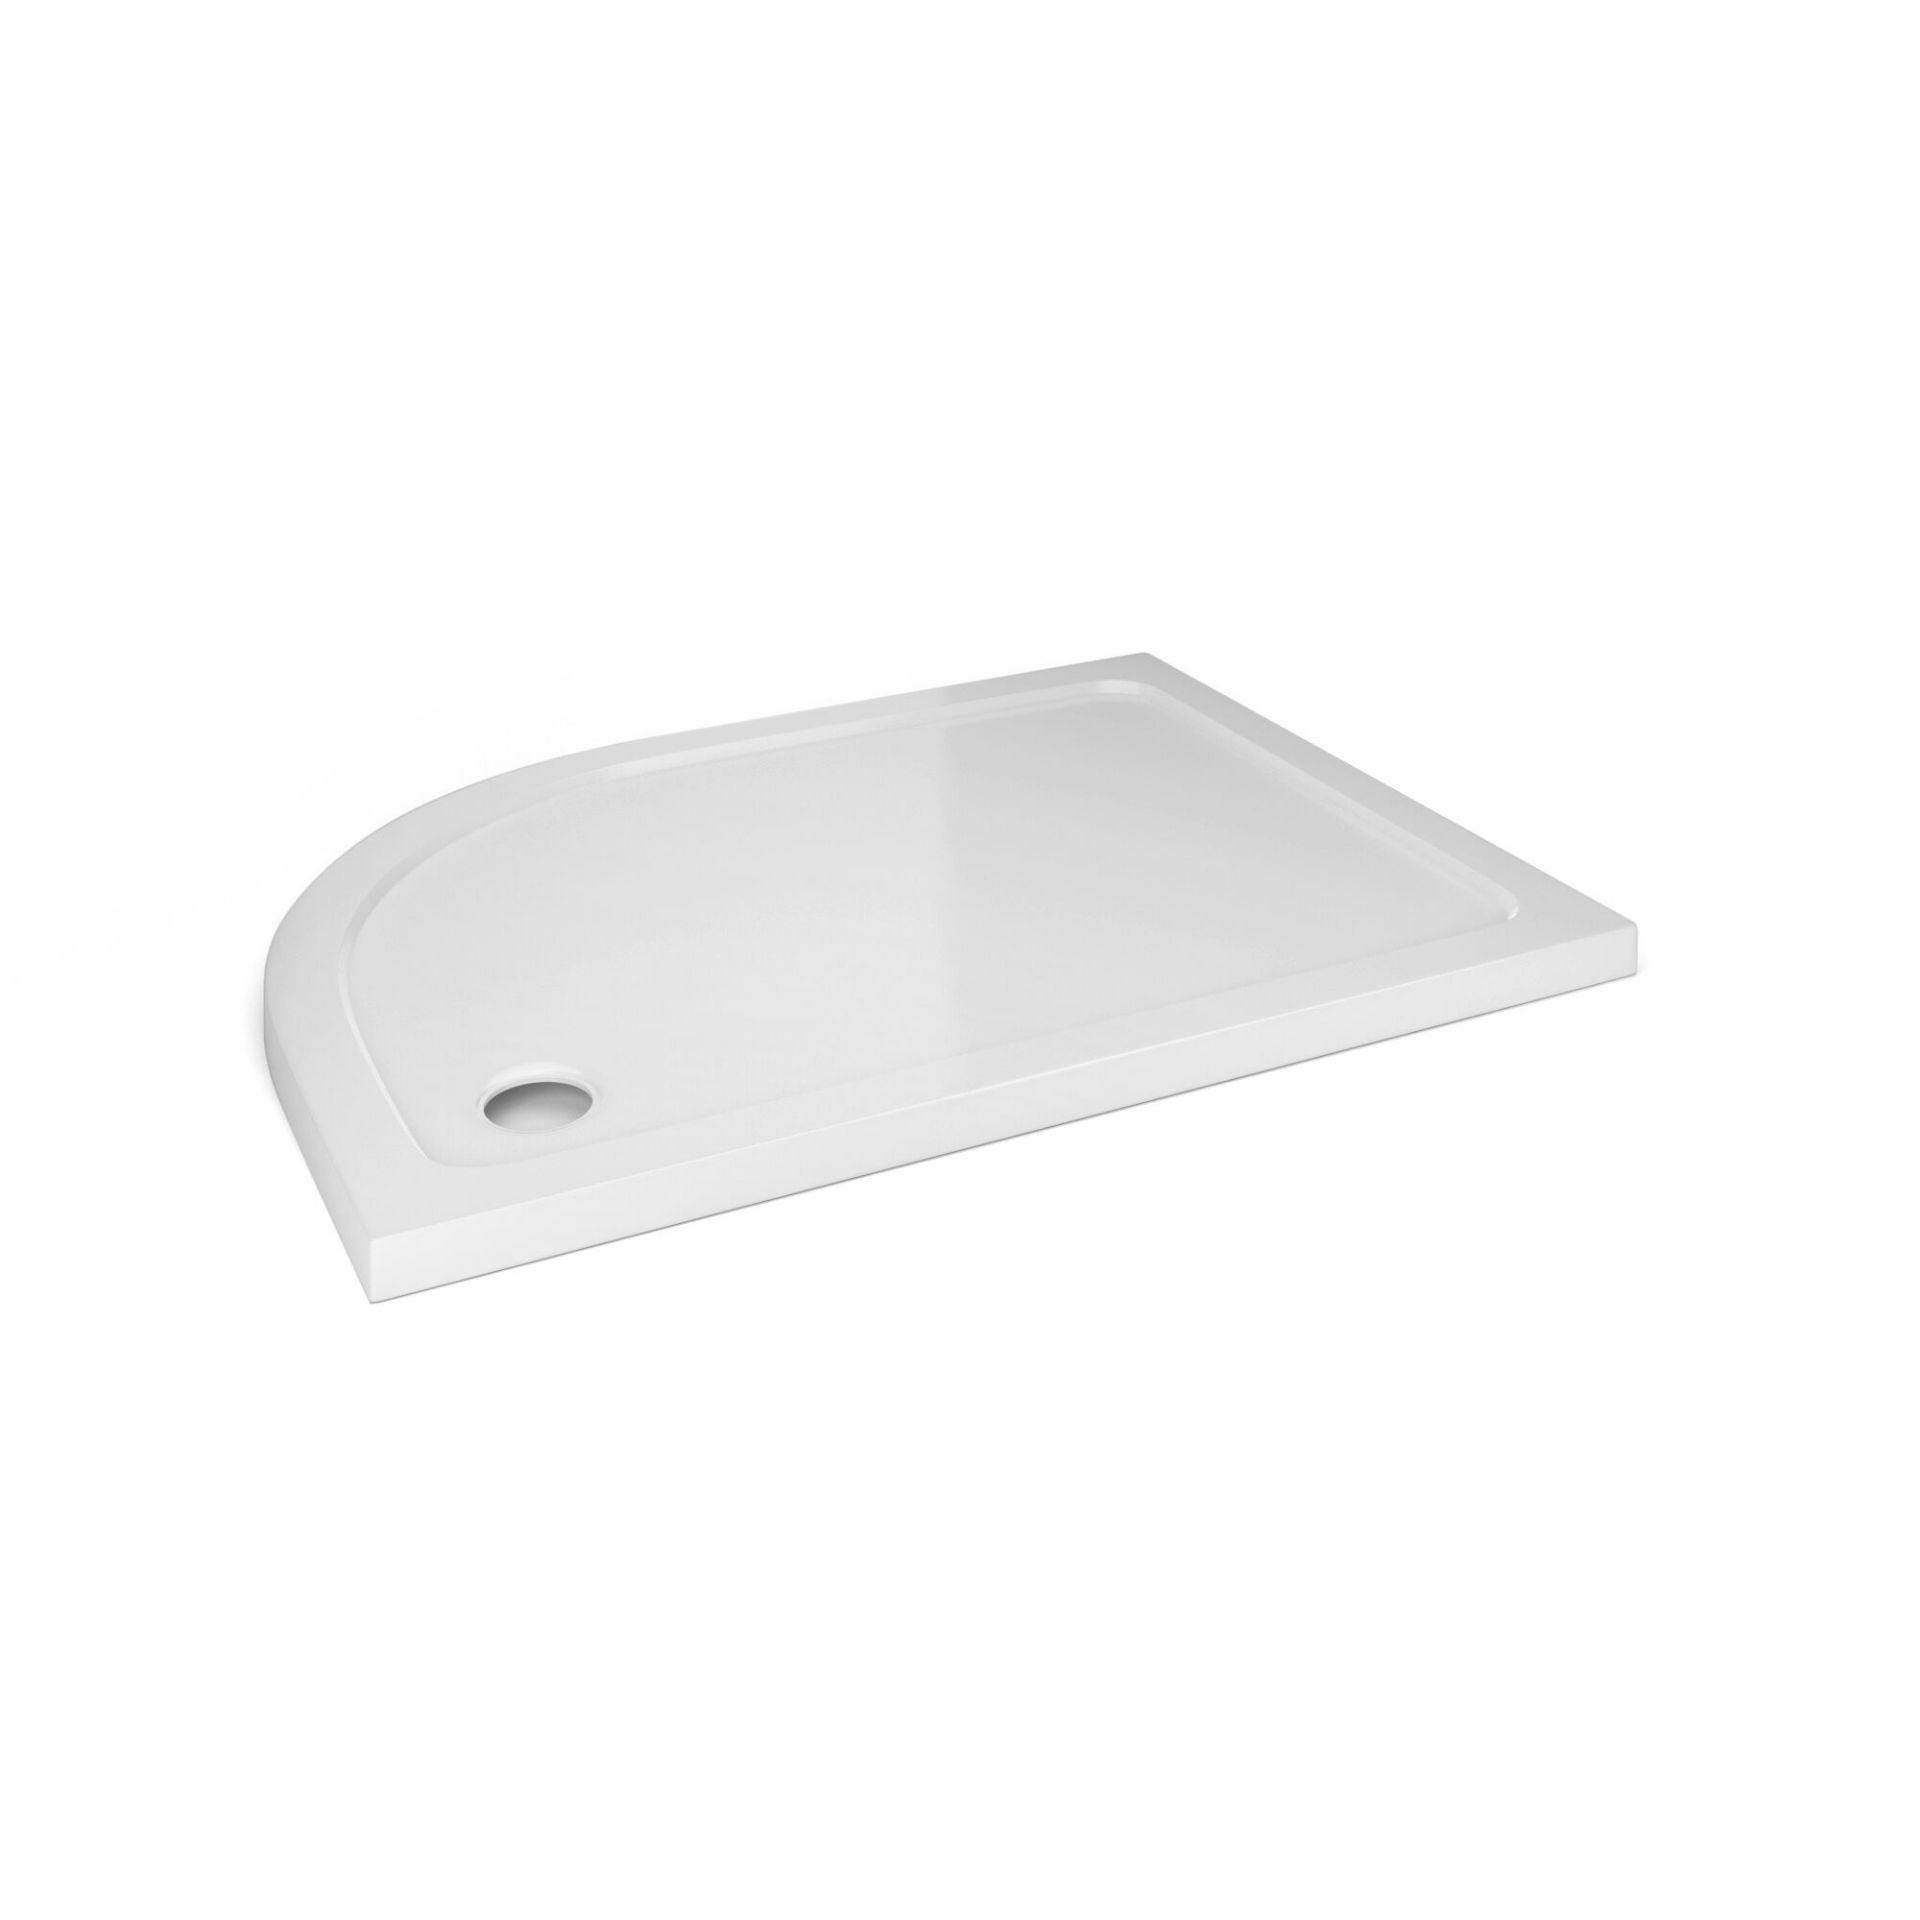 (AD137) 1200x900mm Offset Quadrant Ultra Slim Stone Shower Tray - Right. Low profile ultra slim